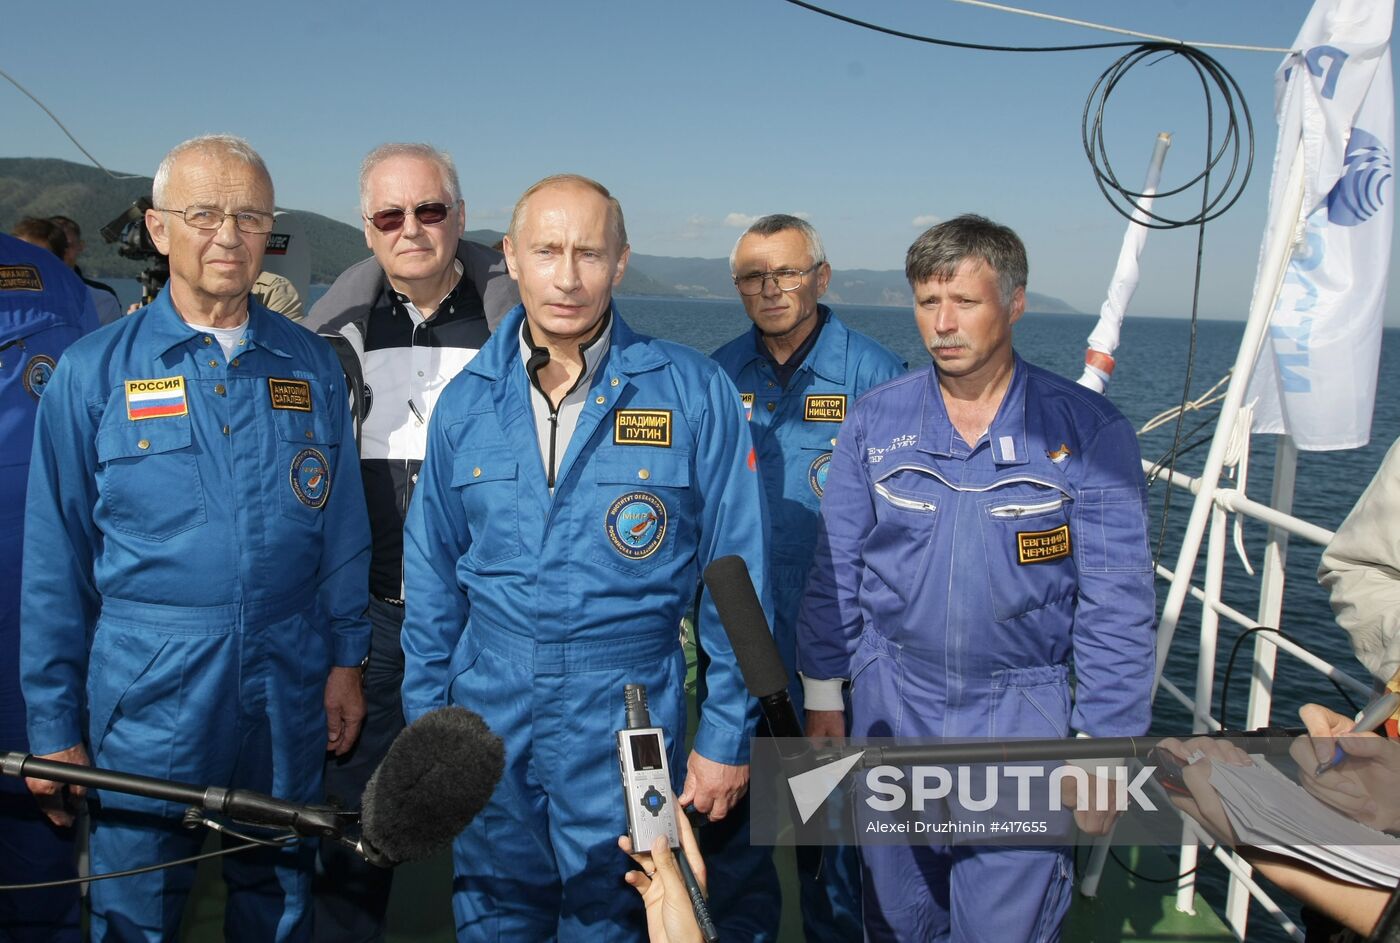 Russian PM Vladimir Putin on Metropol research vessel